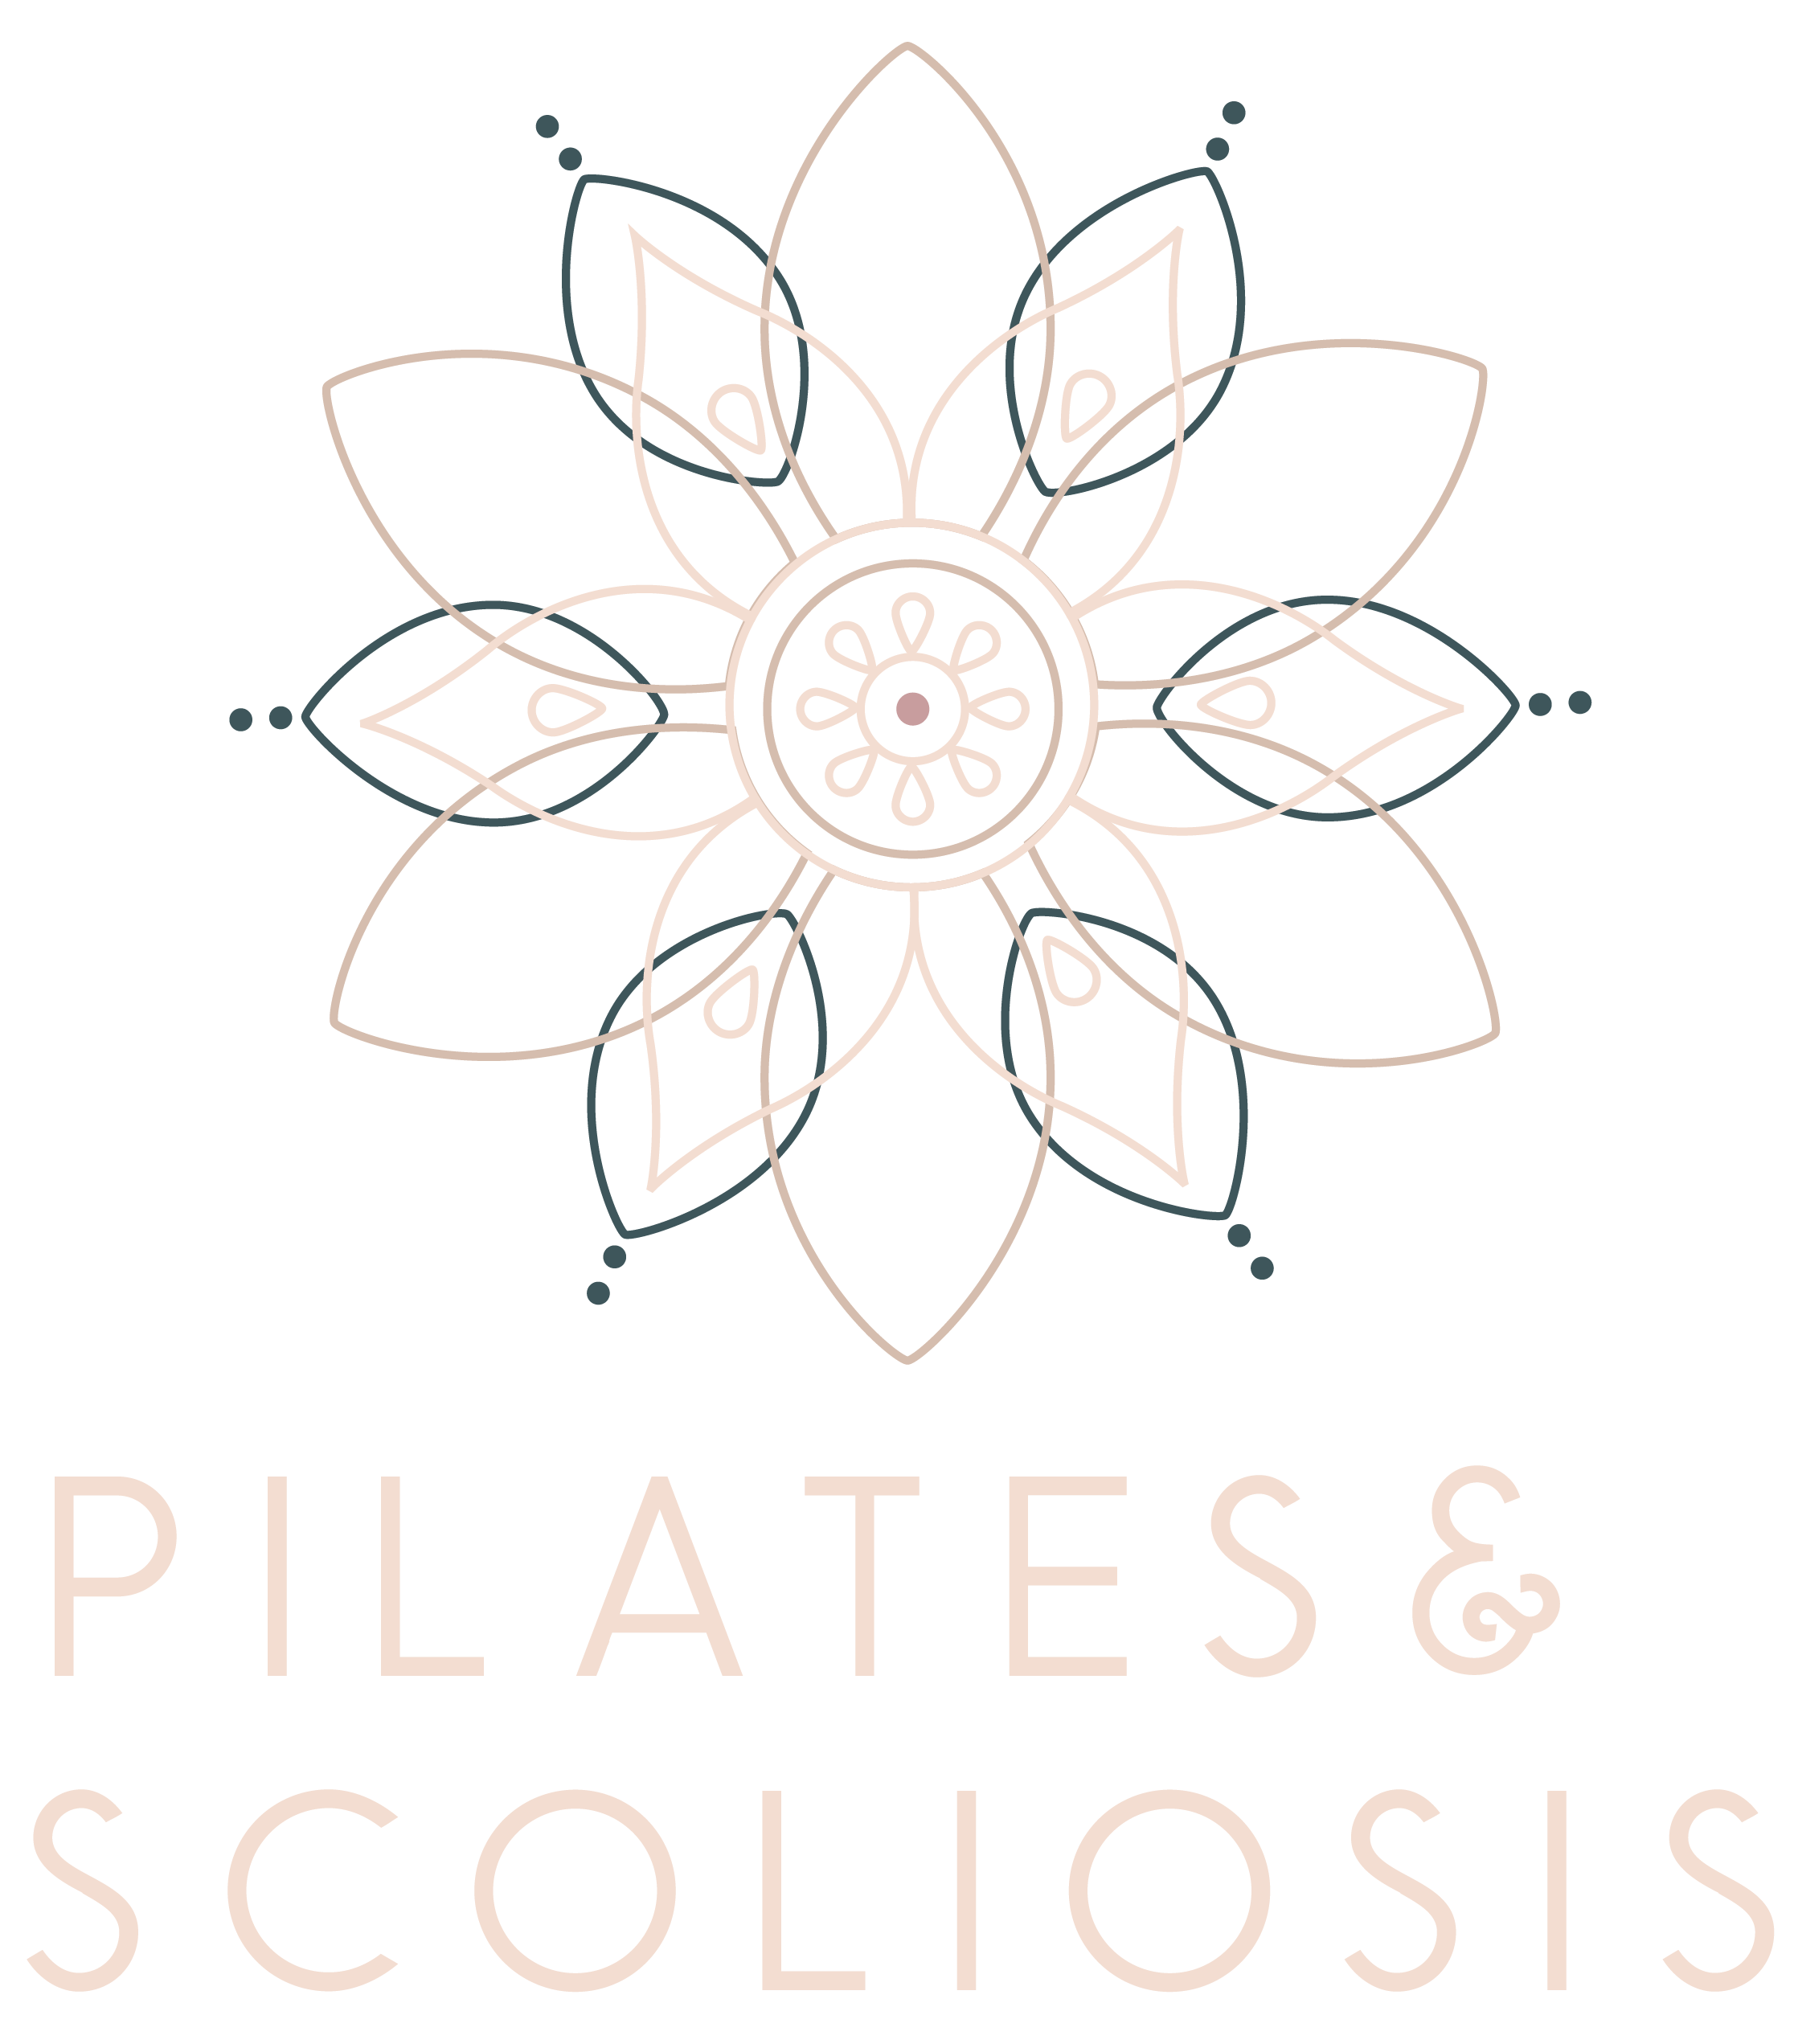 Pilates and Scoliosis Logo Design